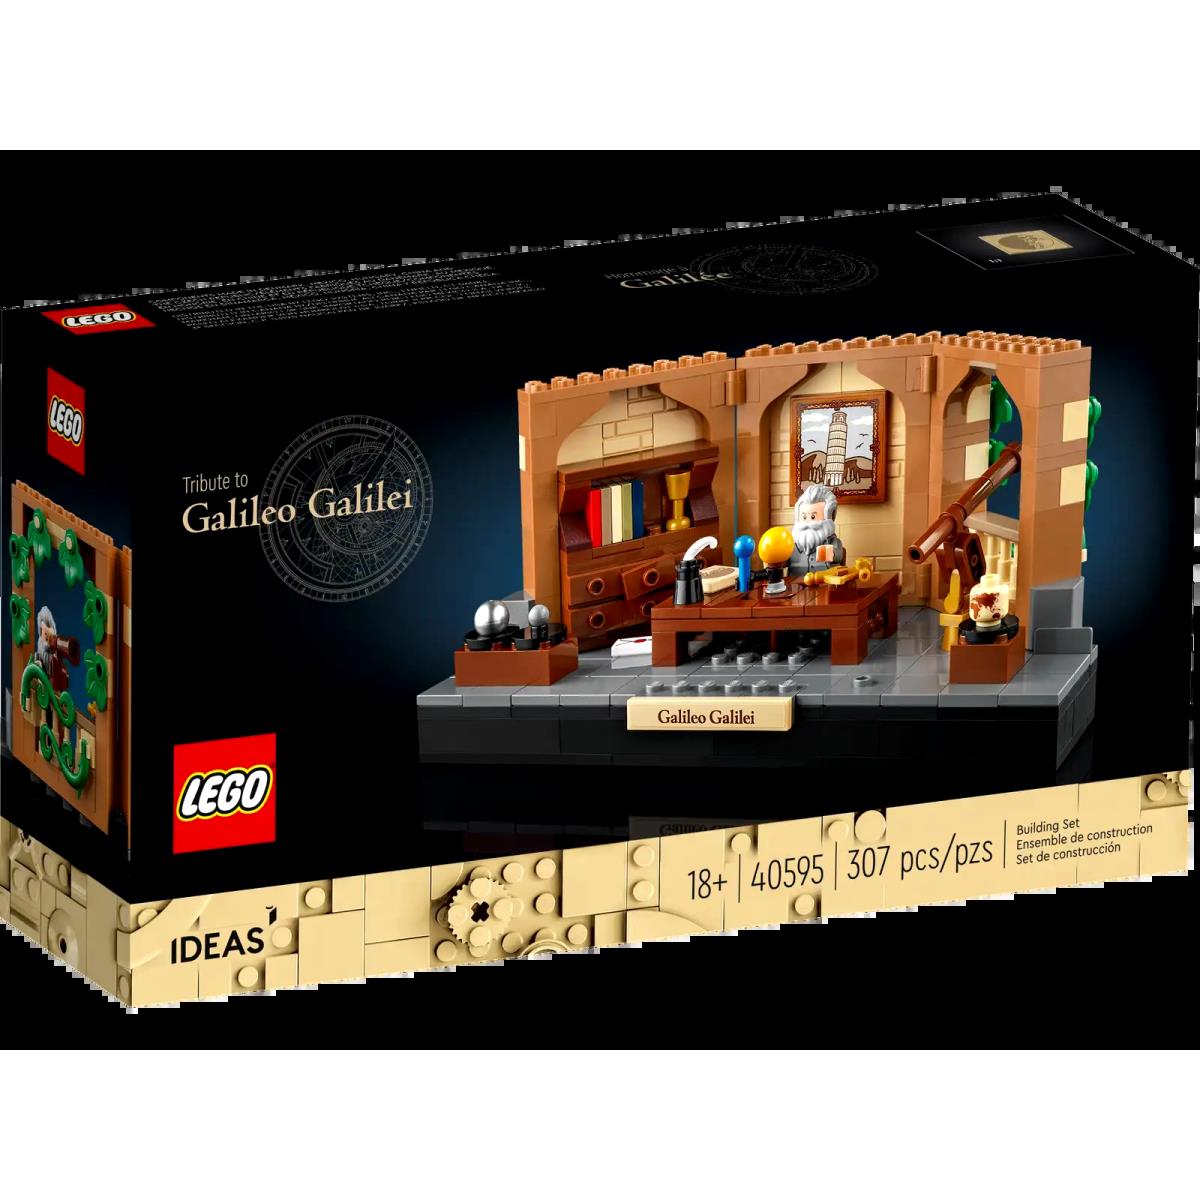 Lego 40595 Tribute to Galileo Galilei New/sealed